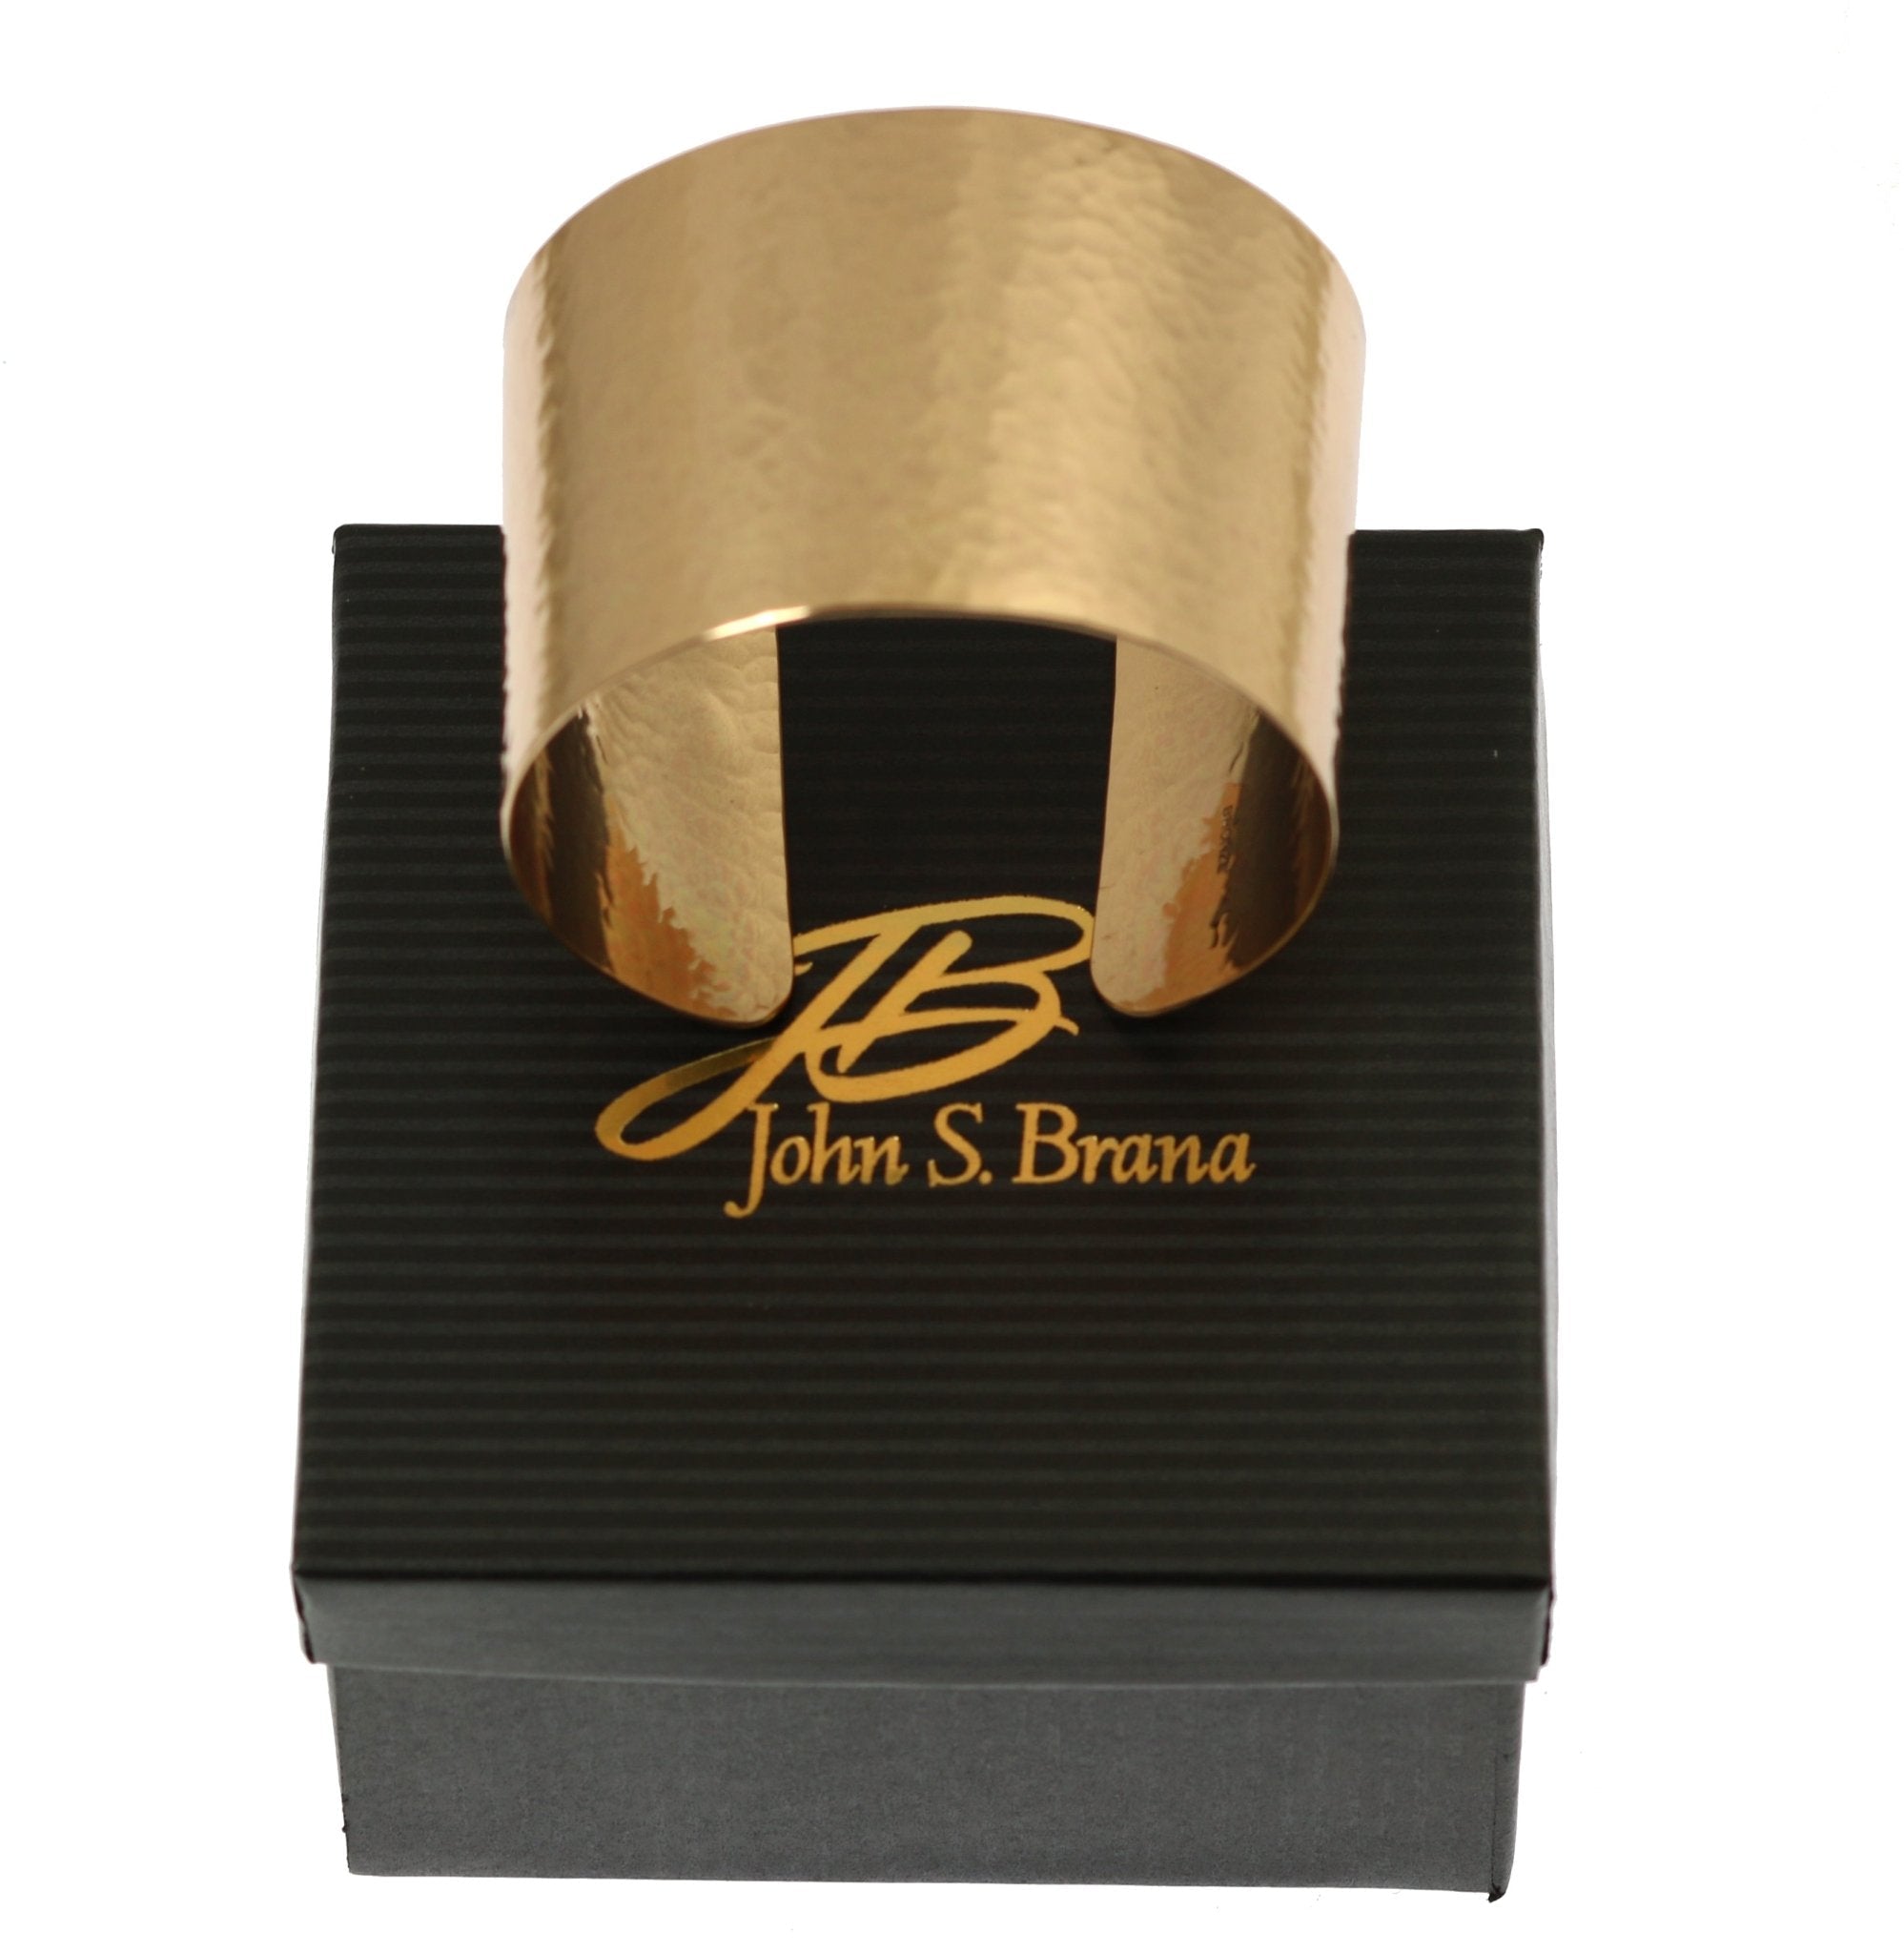 Hammered Bronze Cuff Bracelet in Branded Gift Box